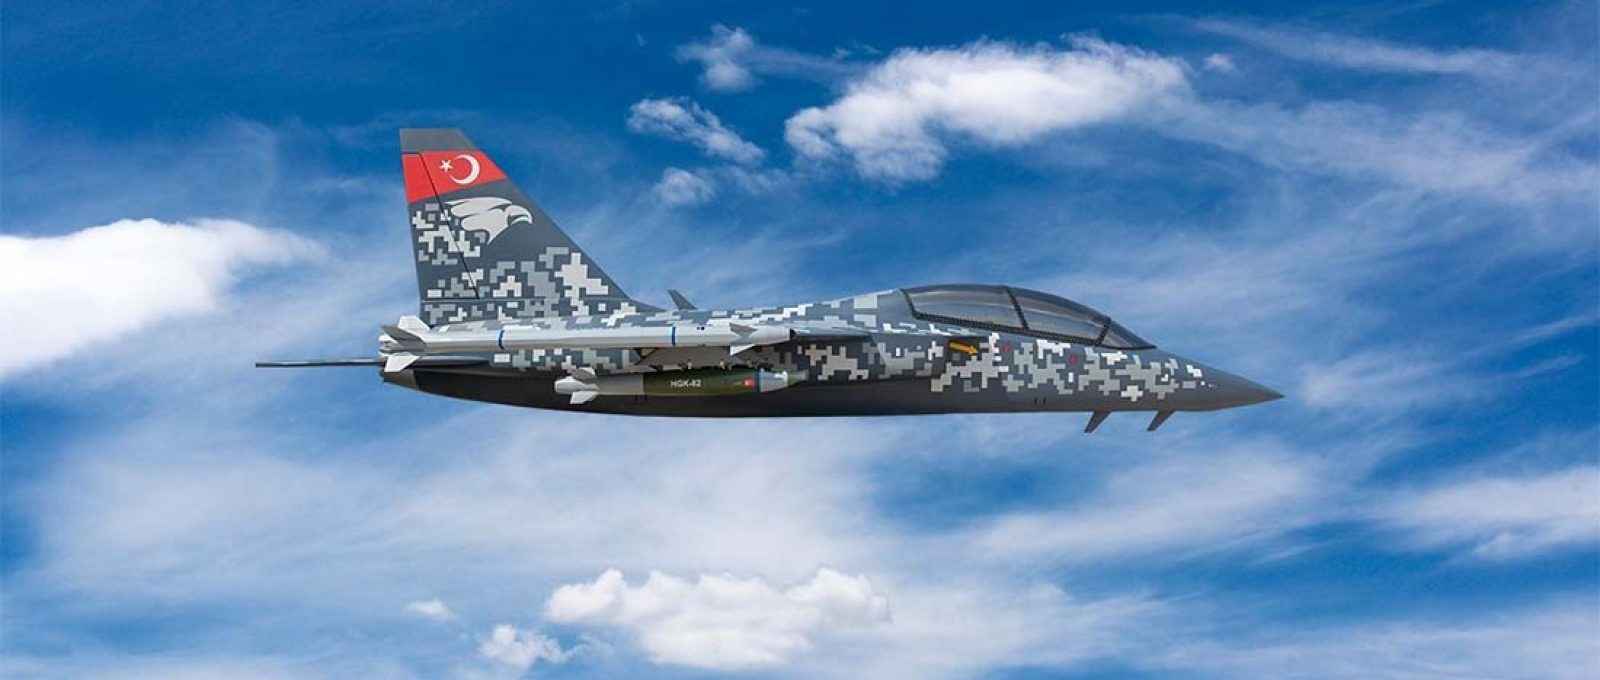 Concepção artística do jato de treinamento avançado turco Hürjet (Turkish Aerospace Industries).